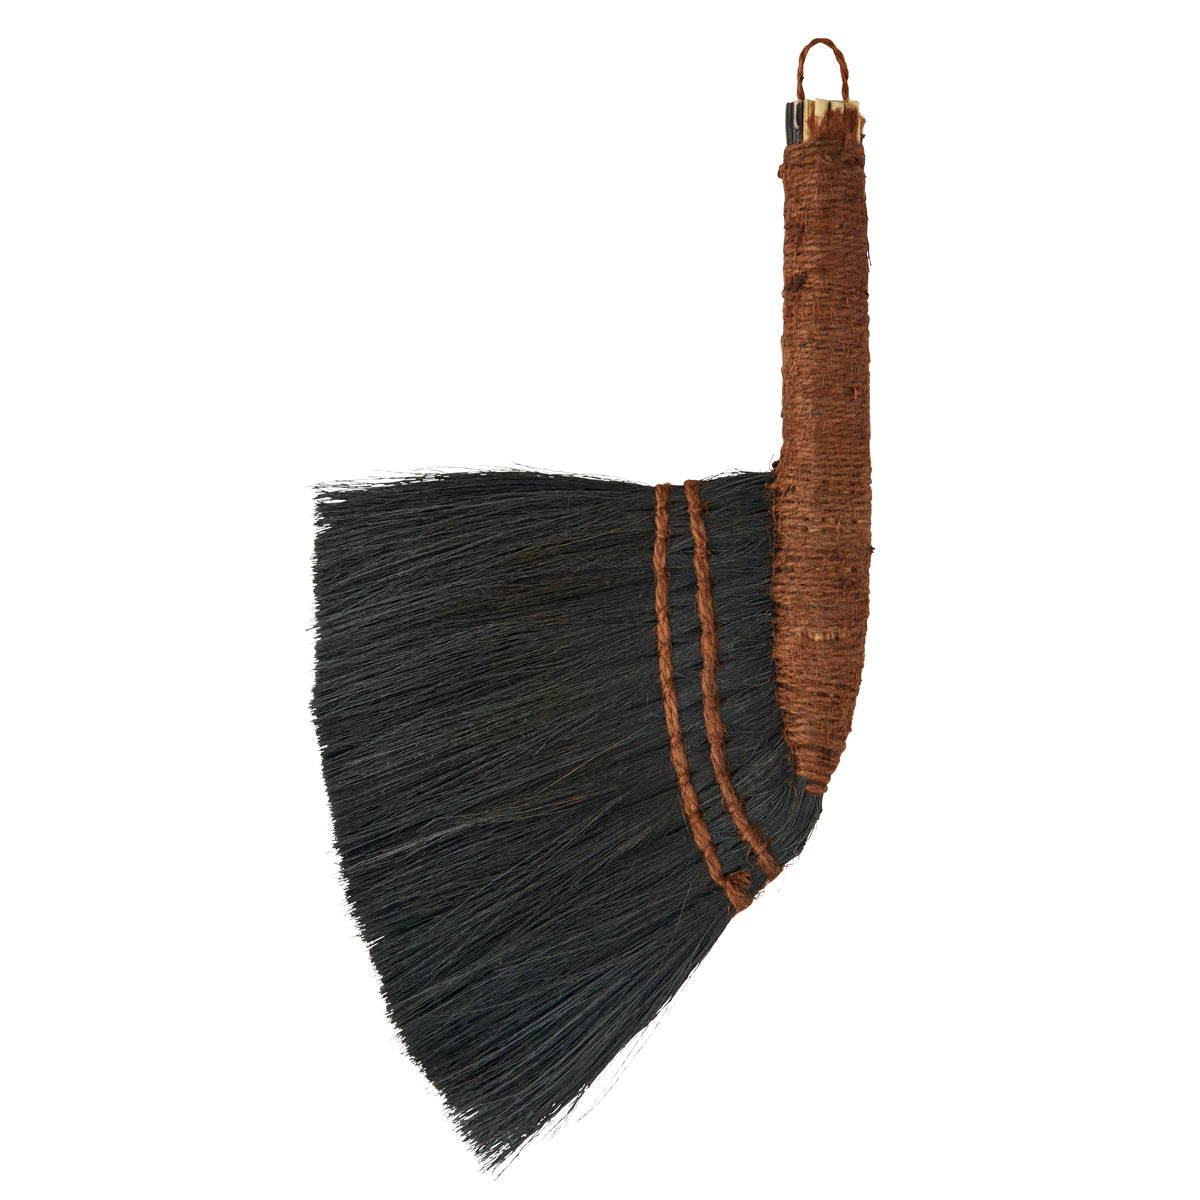 Seagrass Broom - Dark Grey, Brown - Large